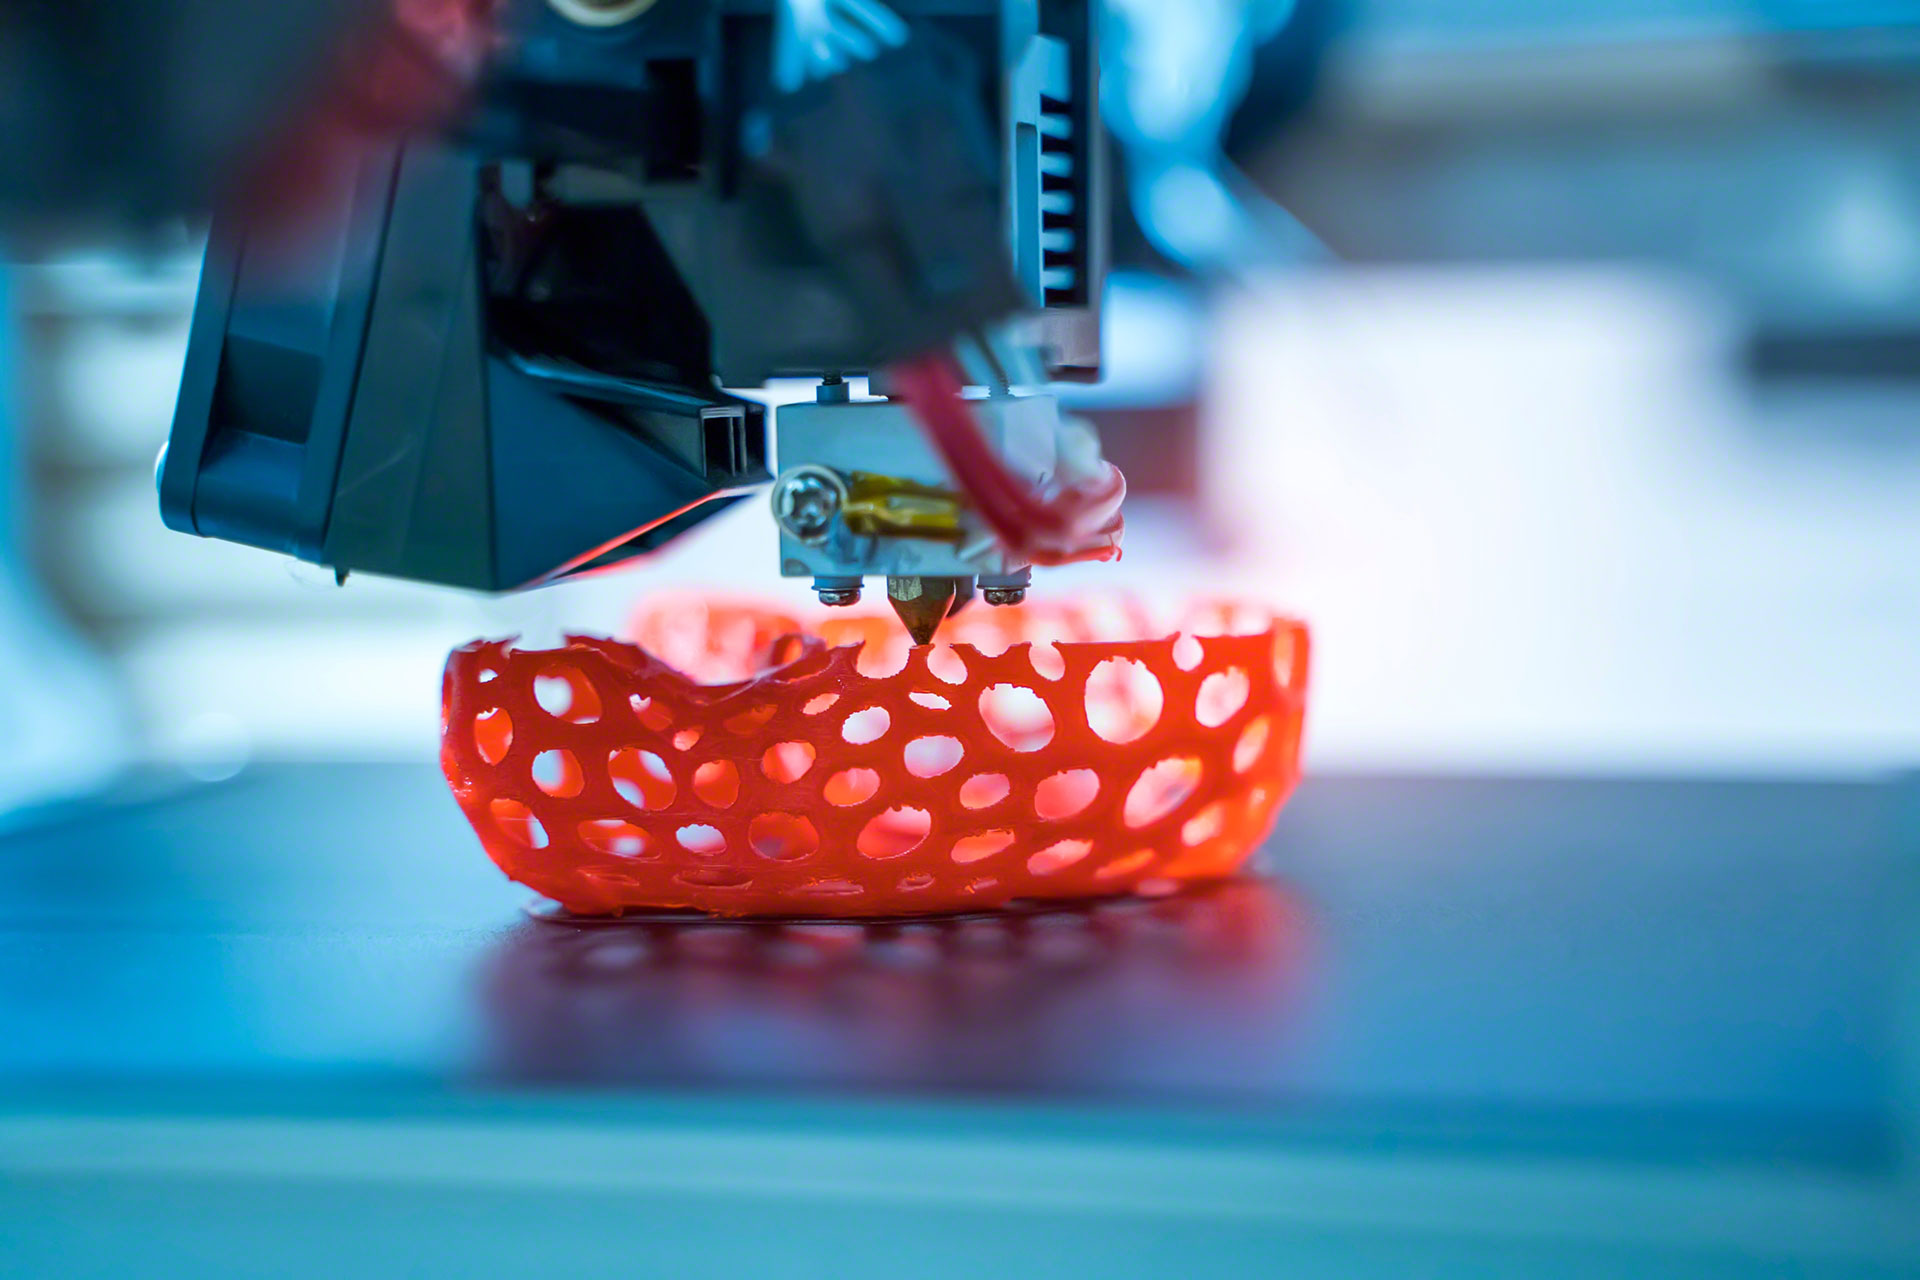 Manufatura aditiva: a impressão 3D digitaliza a manufatura